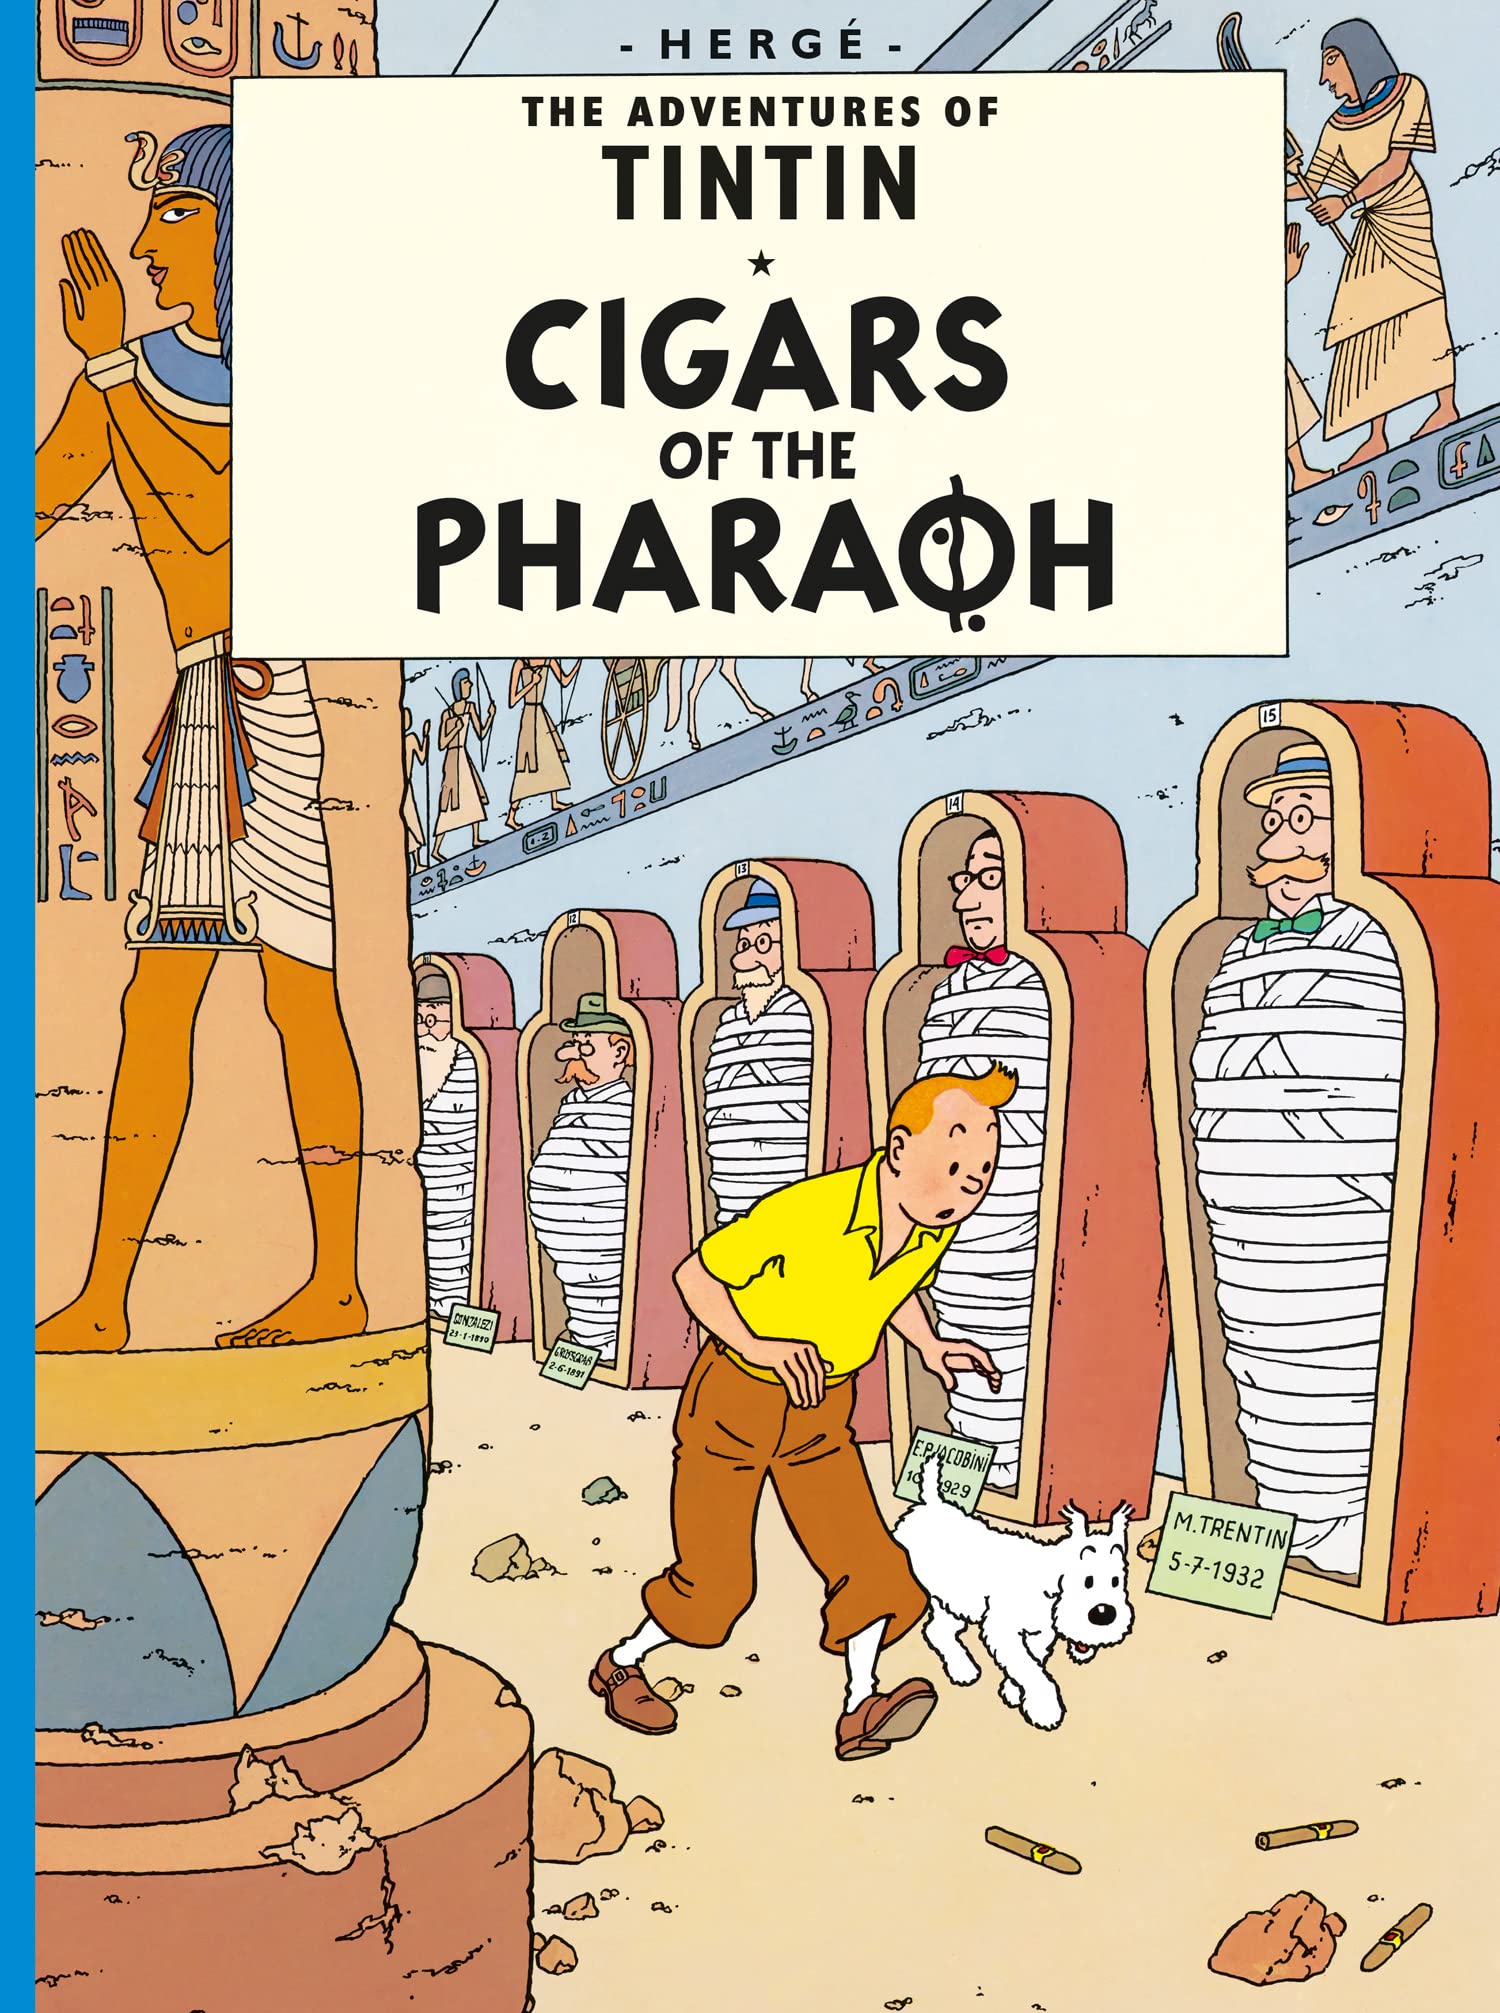 Cigars of the Pharaoh: Tintin 4